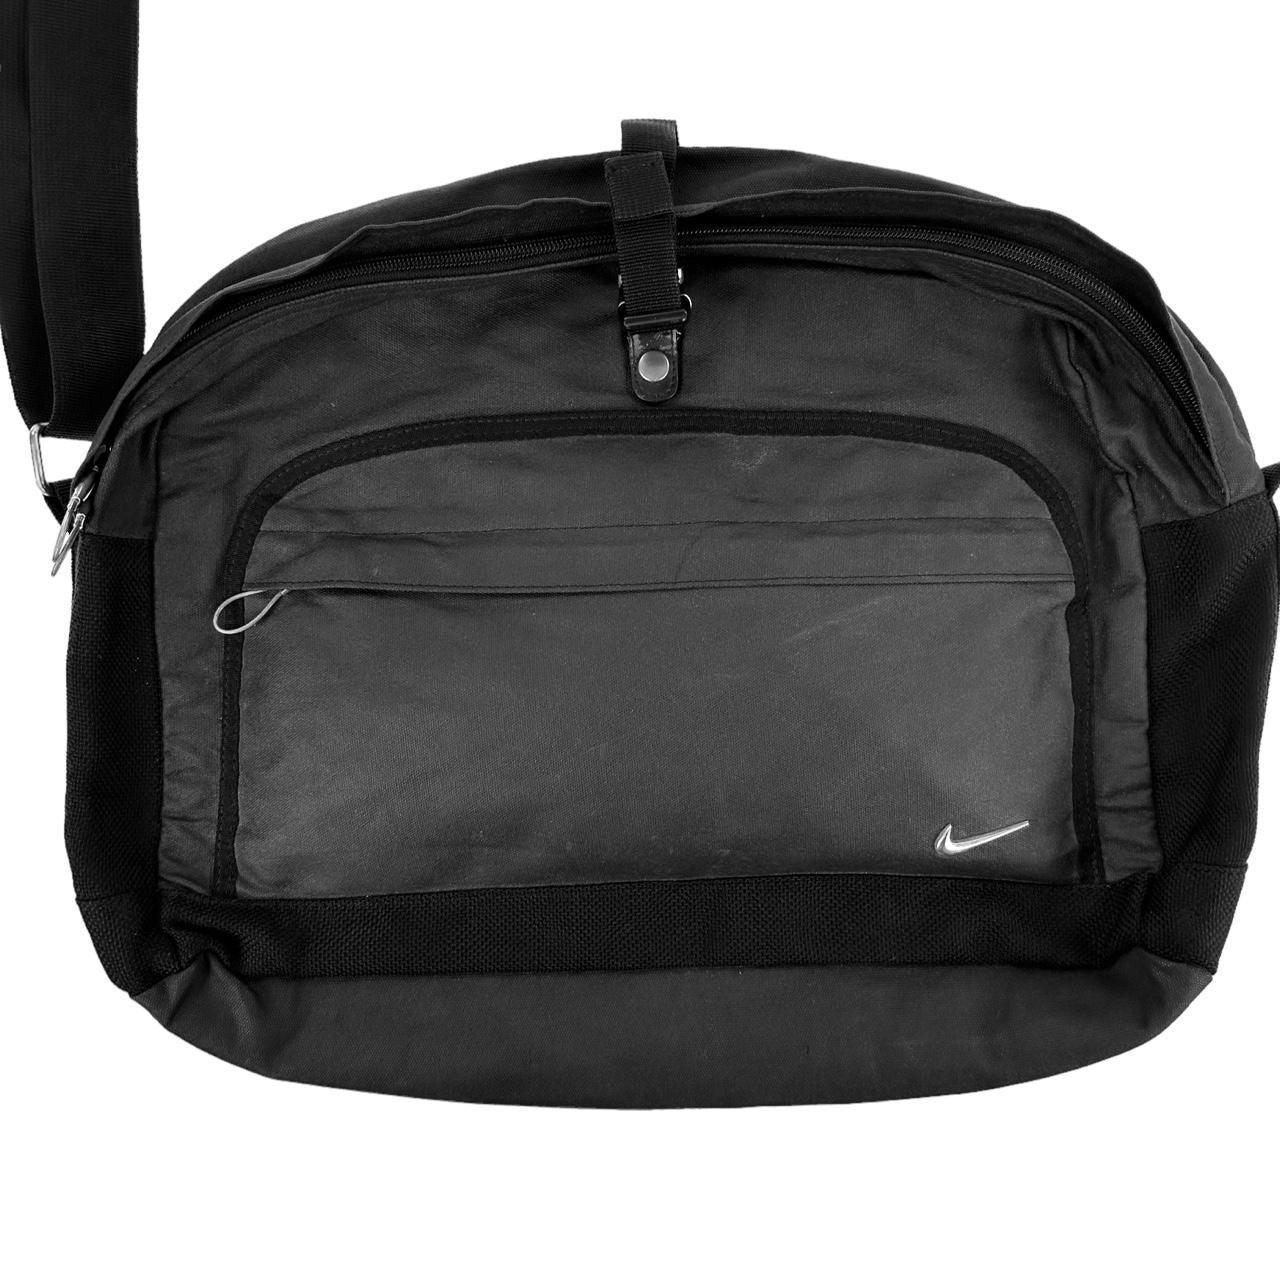 Vintage Nike Cross Body Bag - Known Source